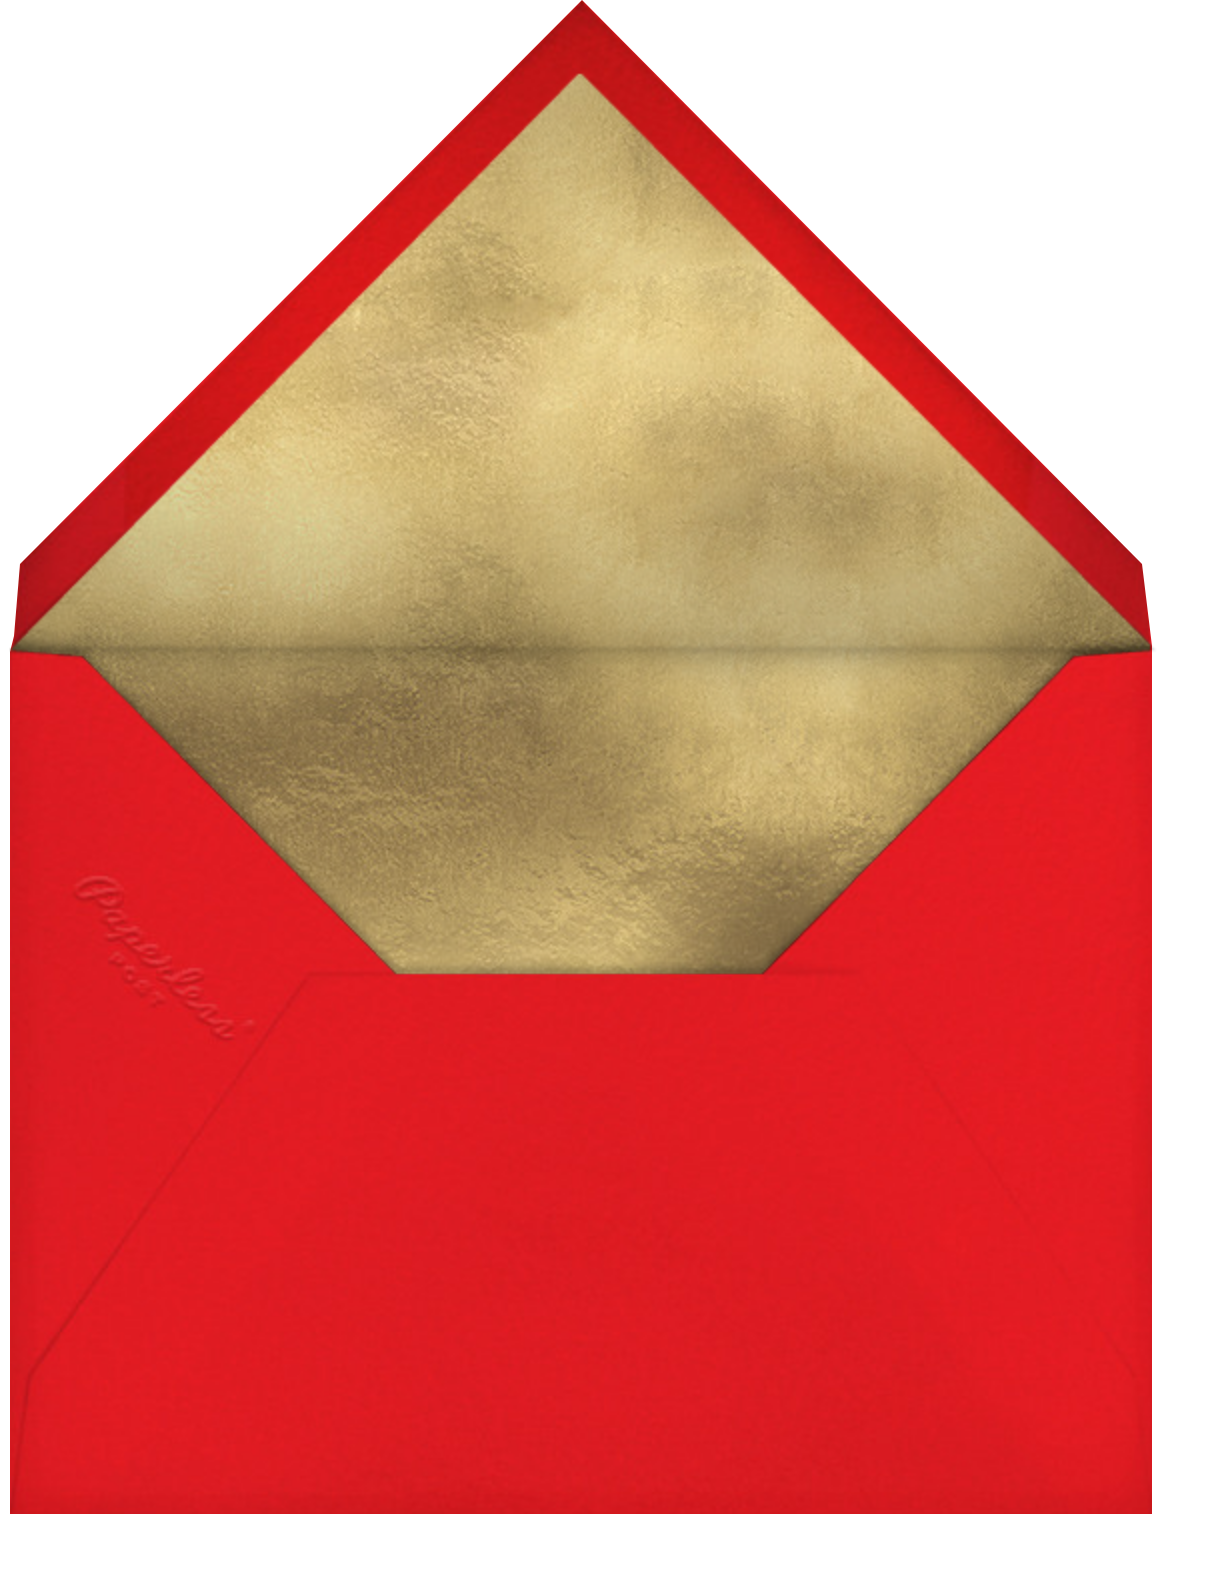 Pink Trees (Kate Pugsley) - Red Cap Cards - Envelope